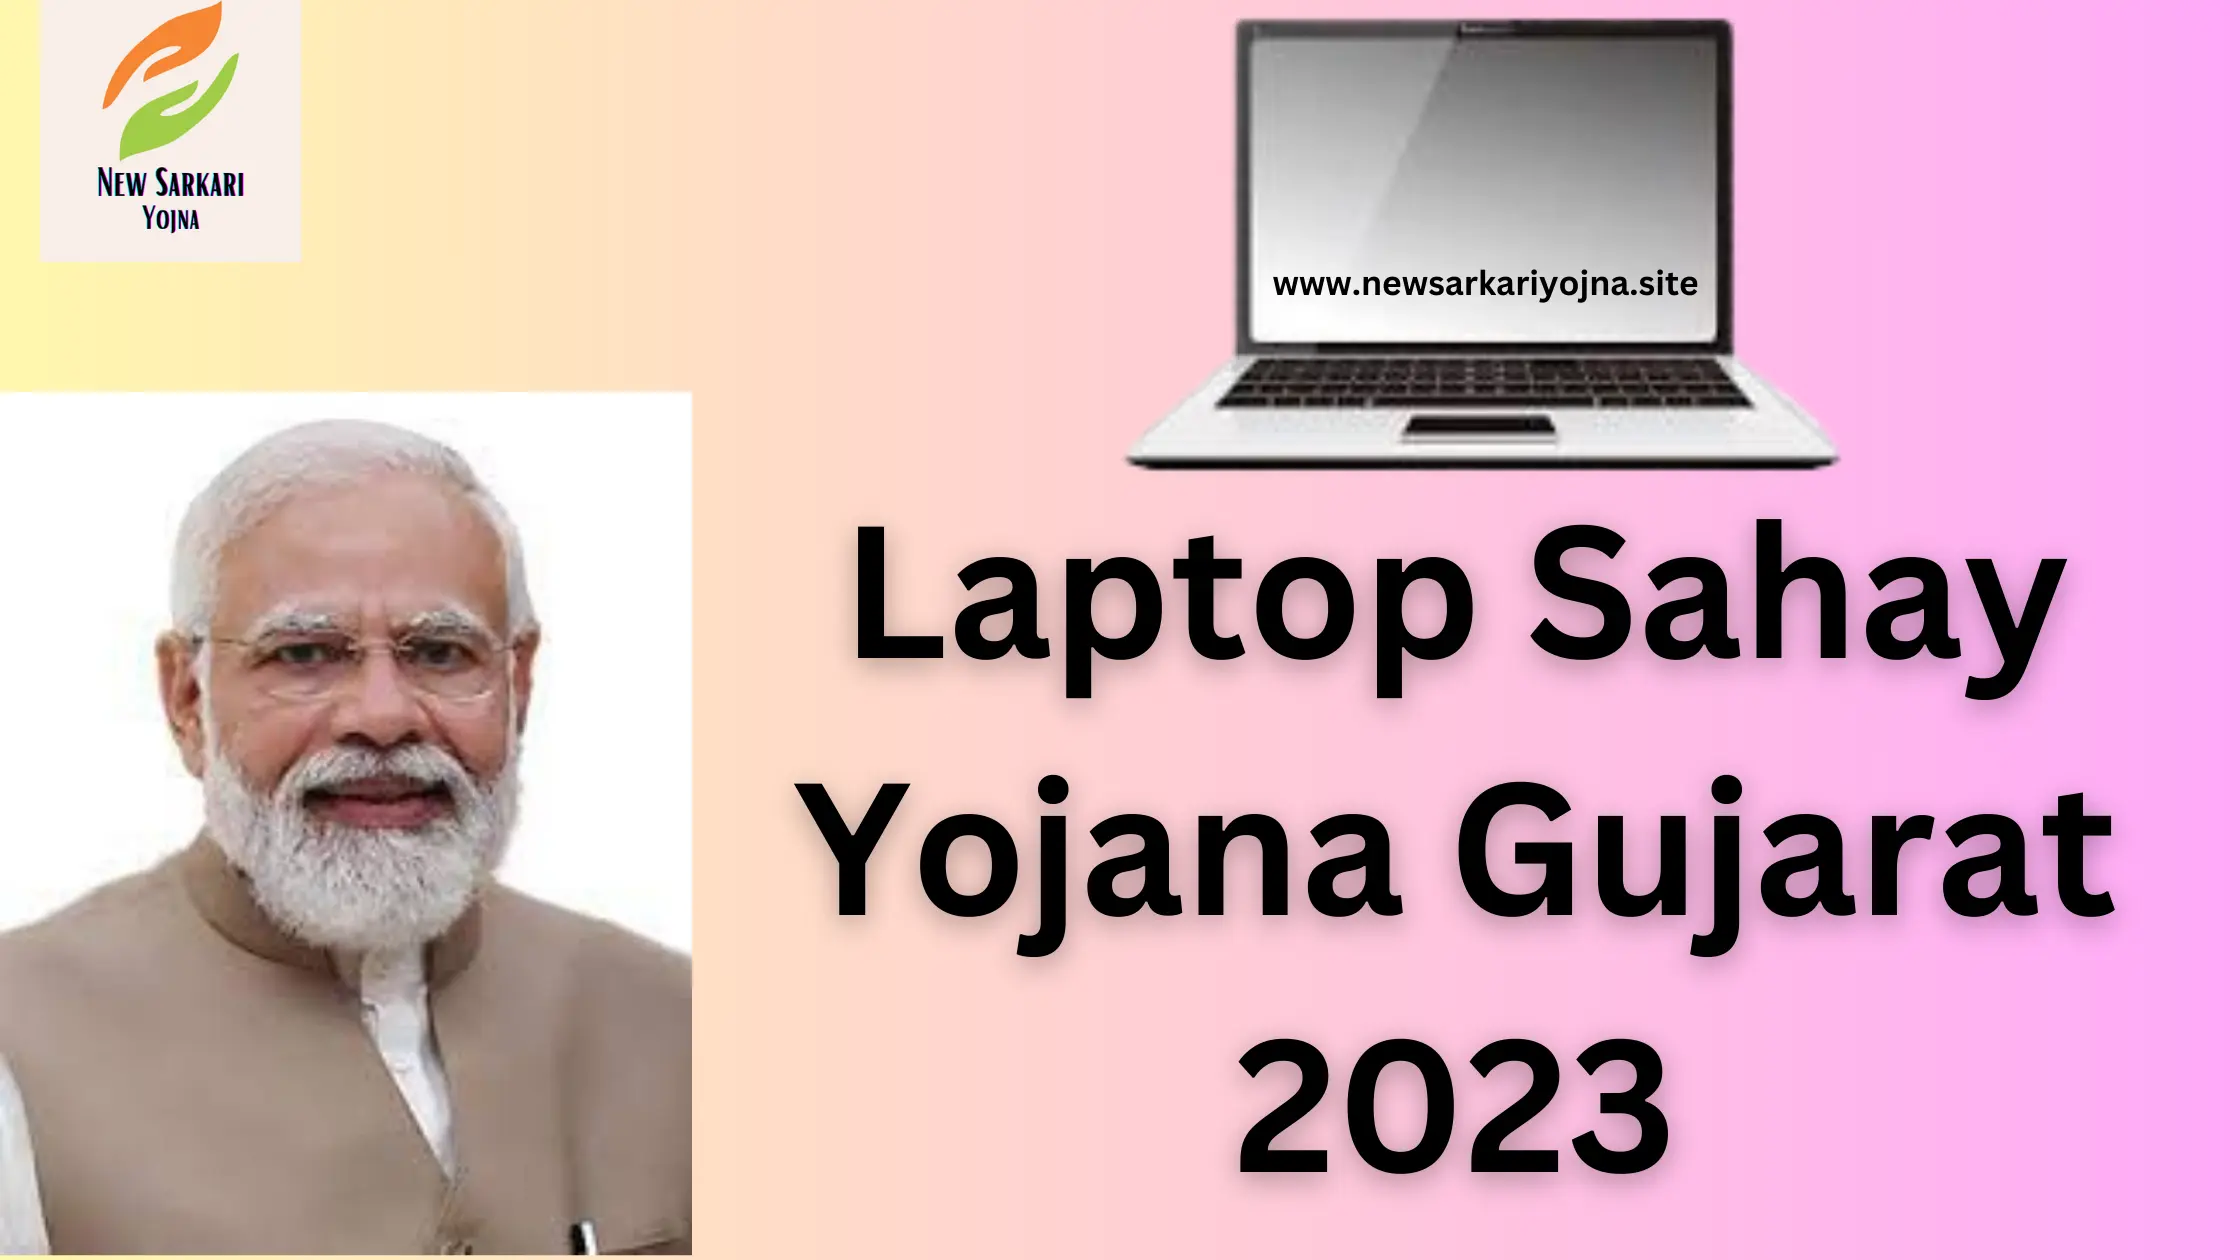 Laptop Sahay Yojana Gujarat 2023